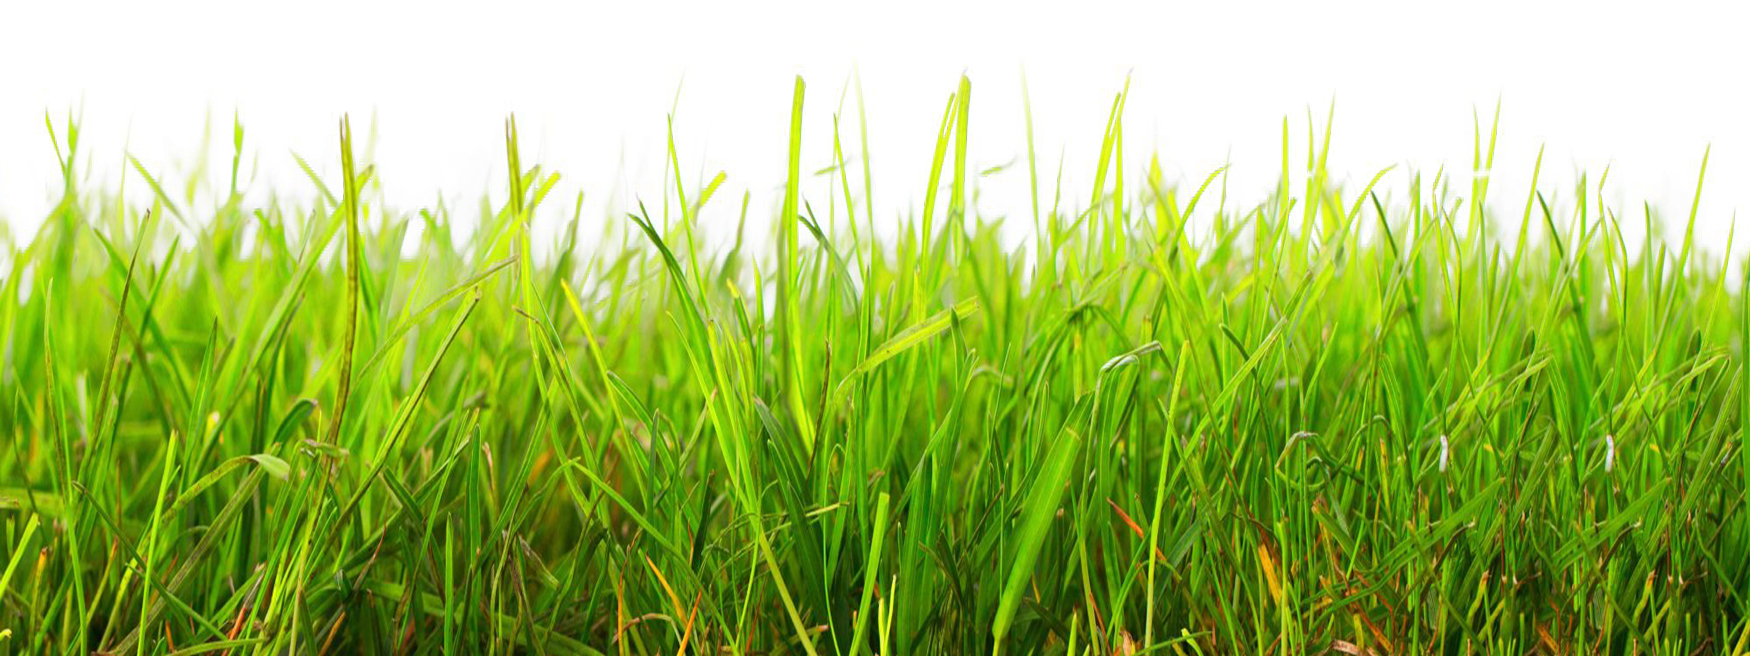 Vector Photos Grass Natural Free Download Image PNG Image